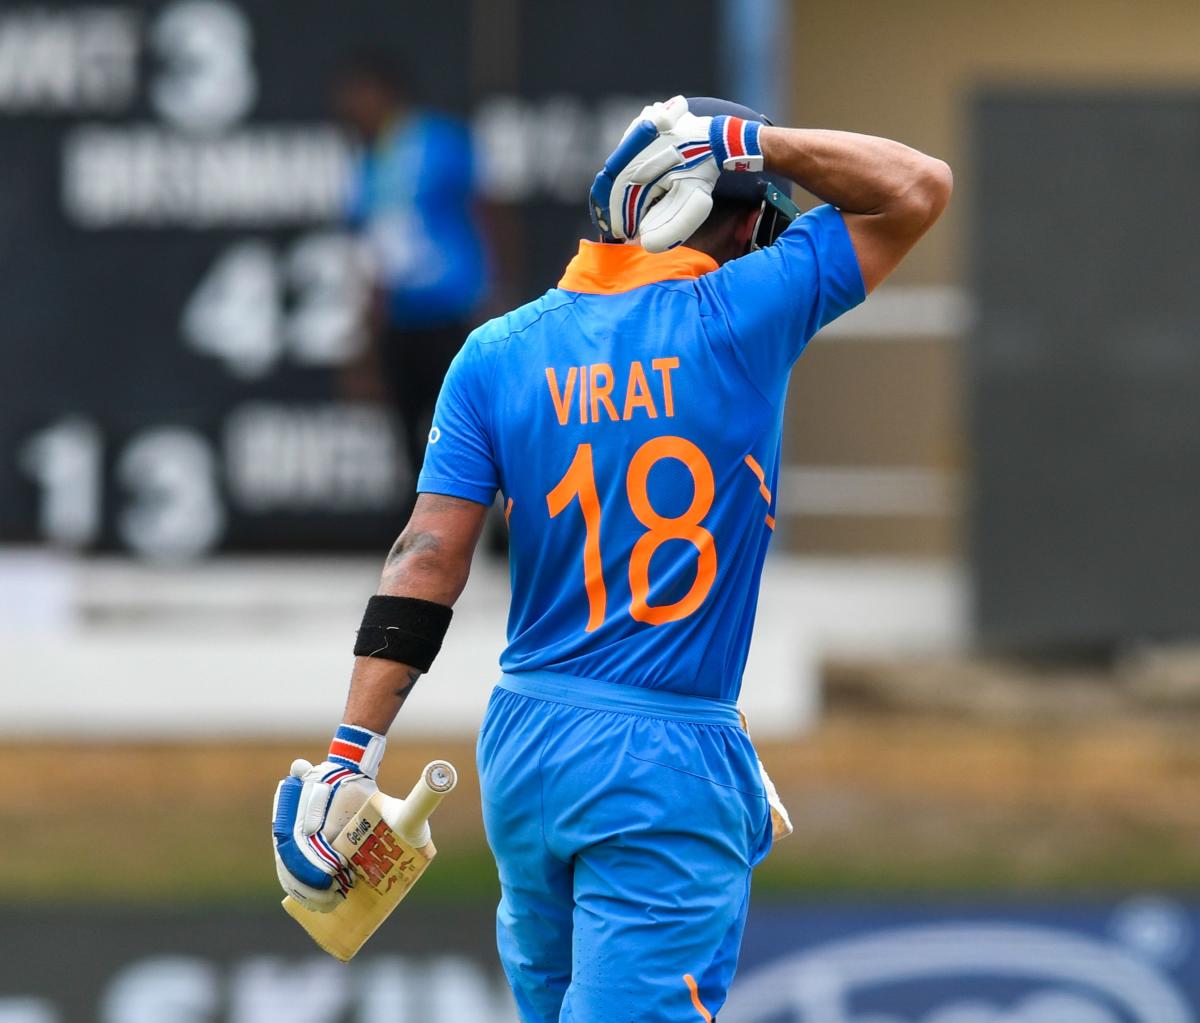 Former Indian captain Virat Kohli became the second highest run getter of all time surpassing his gaffer Rahul Dravid.